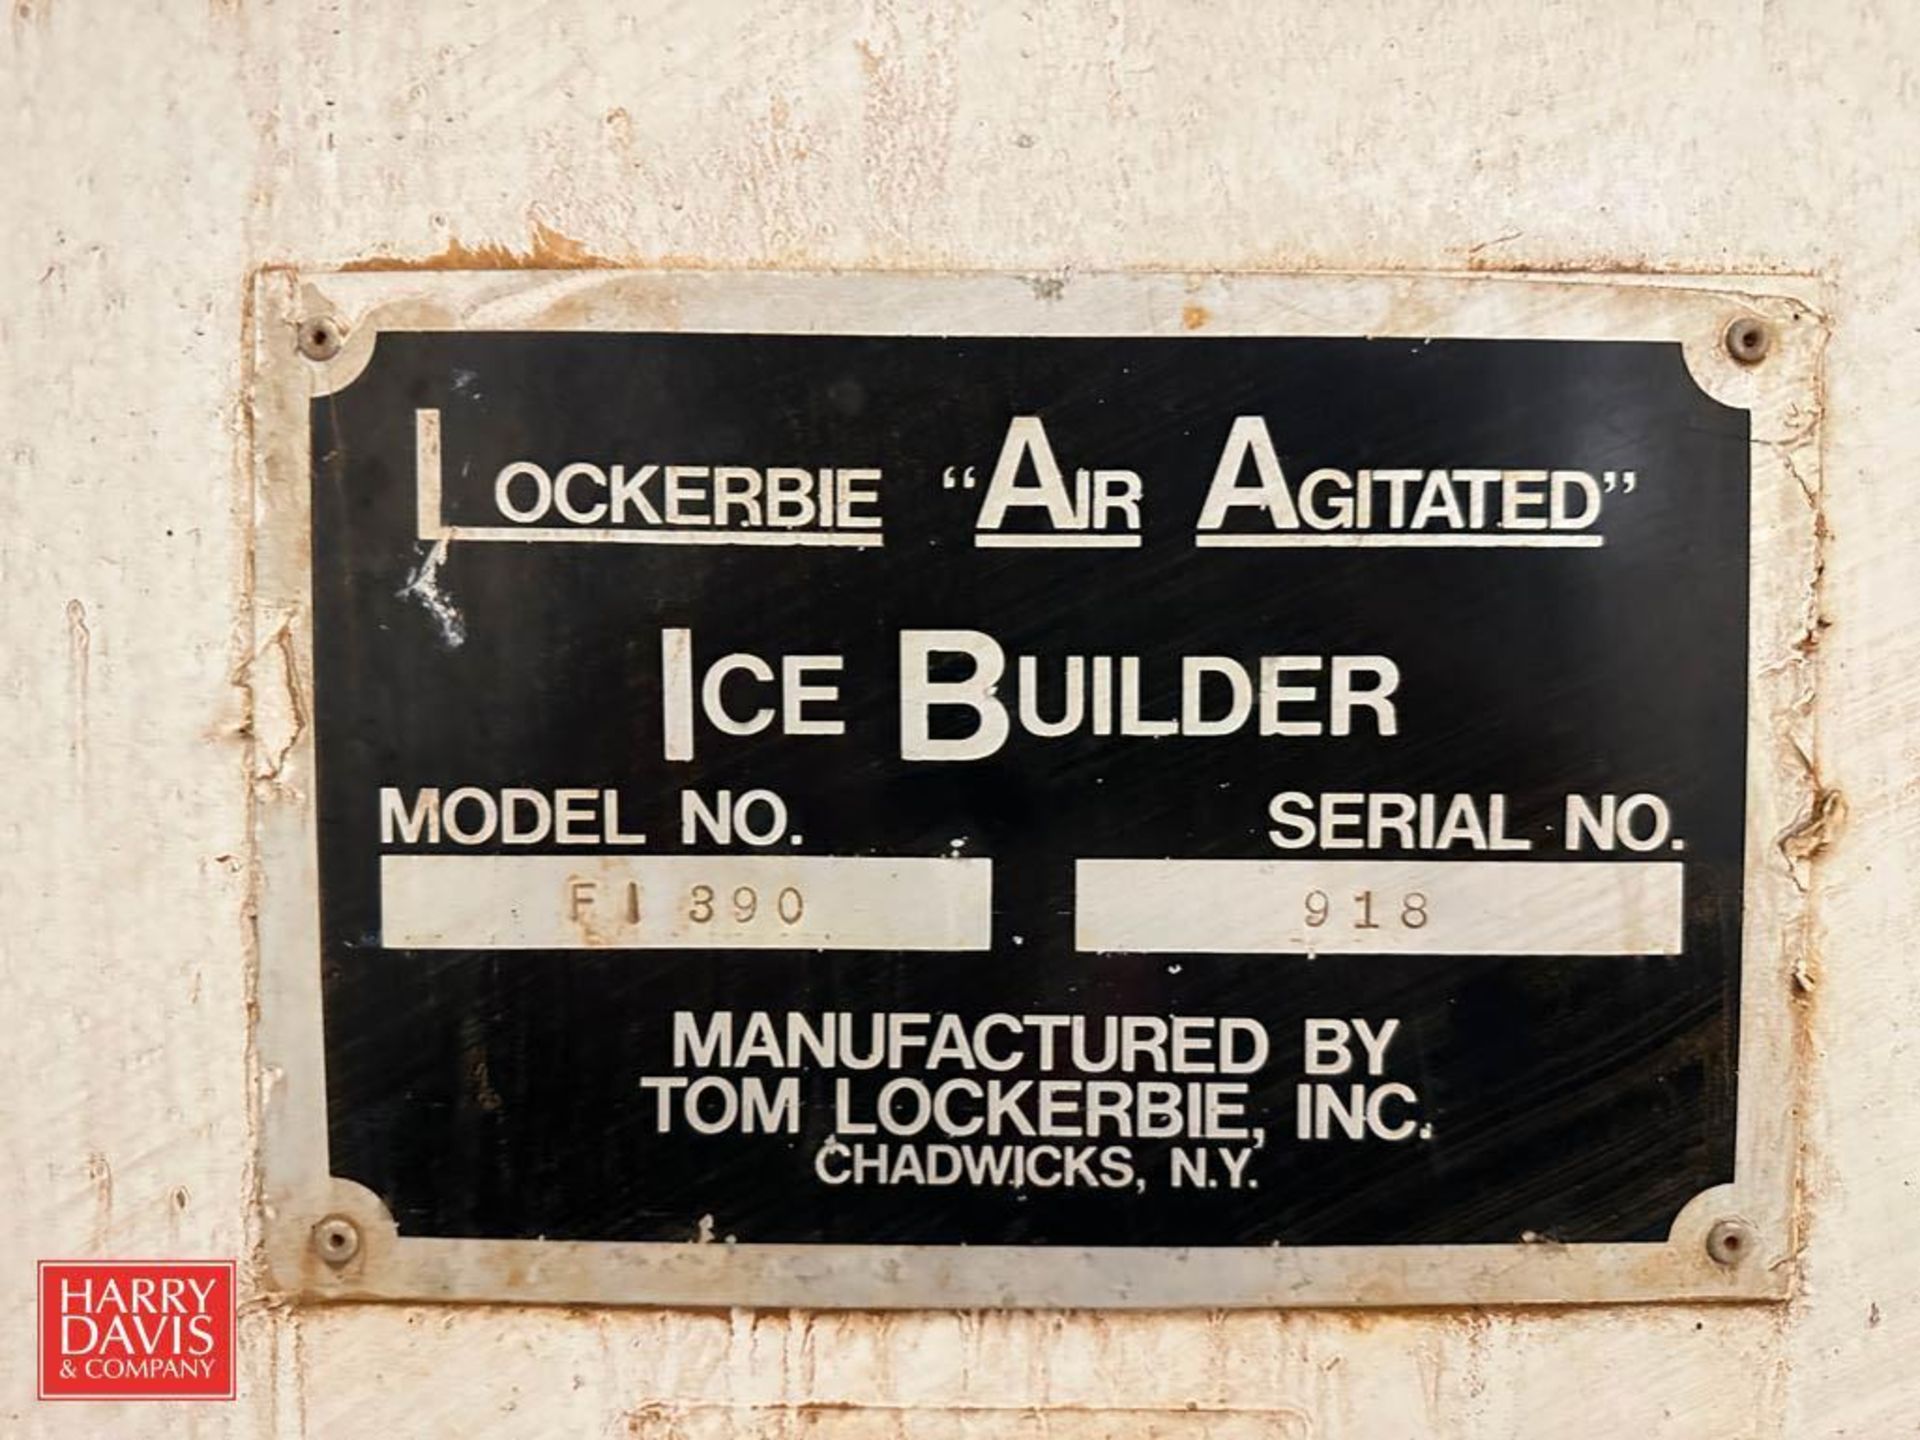 Lockerbie Air Agitated Ice Builder: 282’ x 8’ x 92” Height, Model: F1390 (Parts Machine) - Image 2 of 2